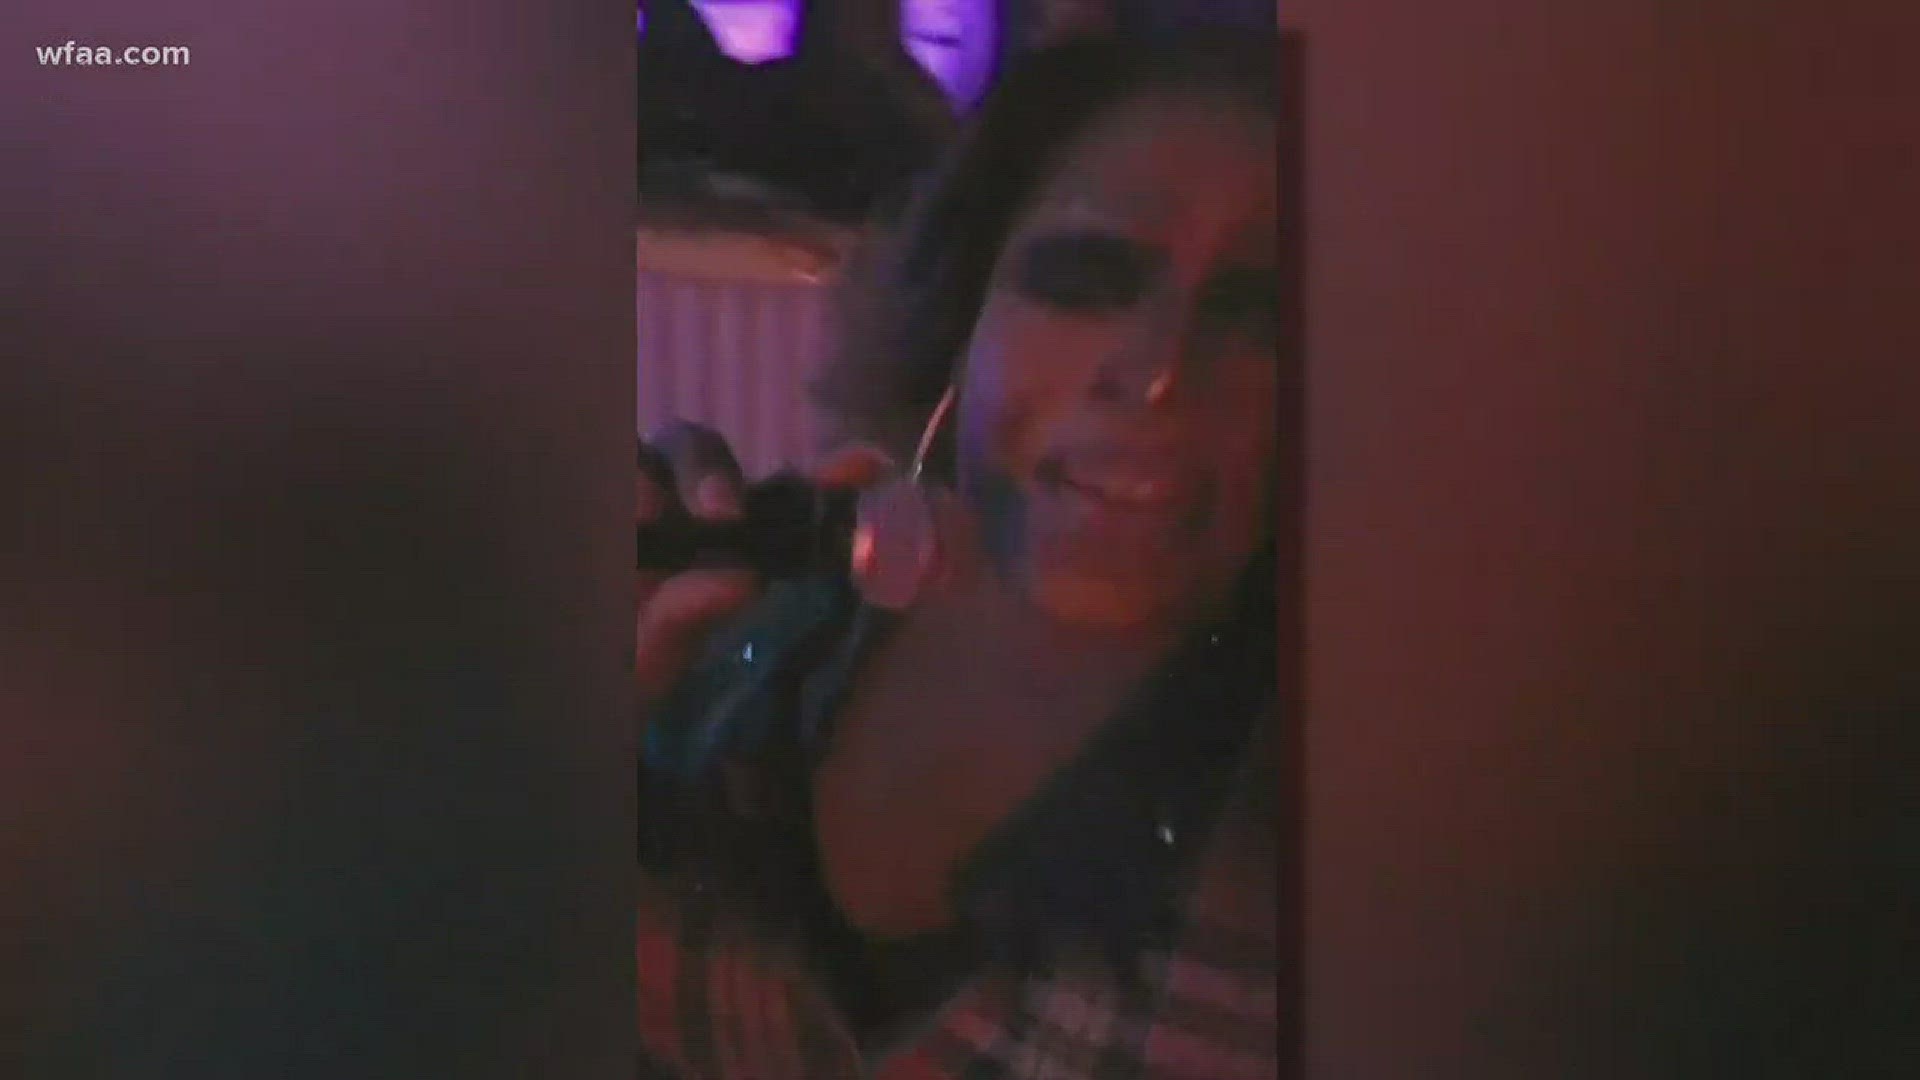 FW man accused of killing drag performer